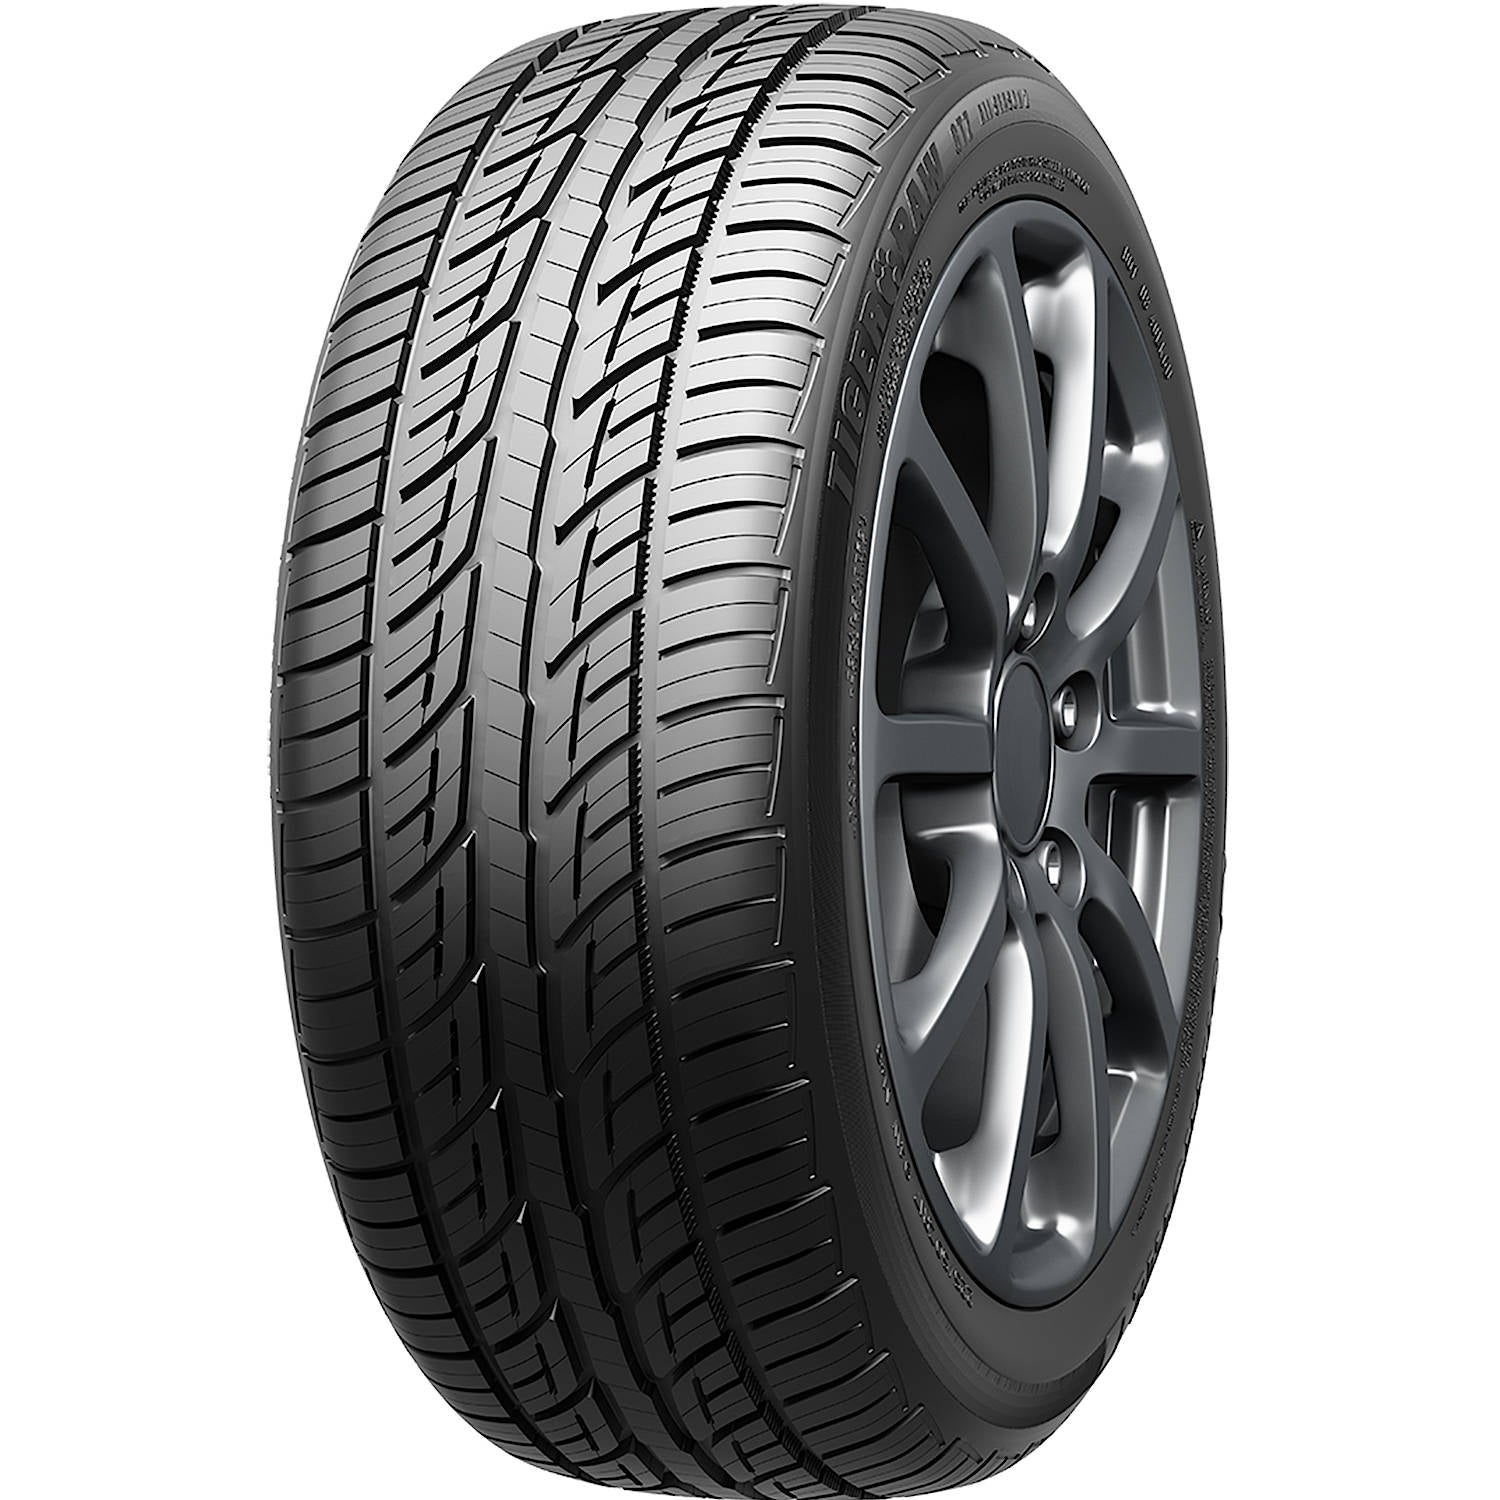 UNIROYAL TIGER PAW GTZ A/S 2 235/35R19 (25.5X9.3R 19) Tires